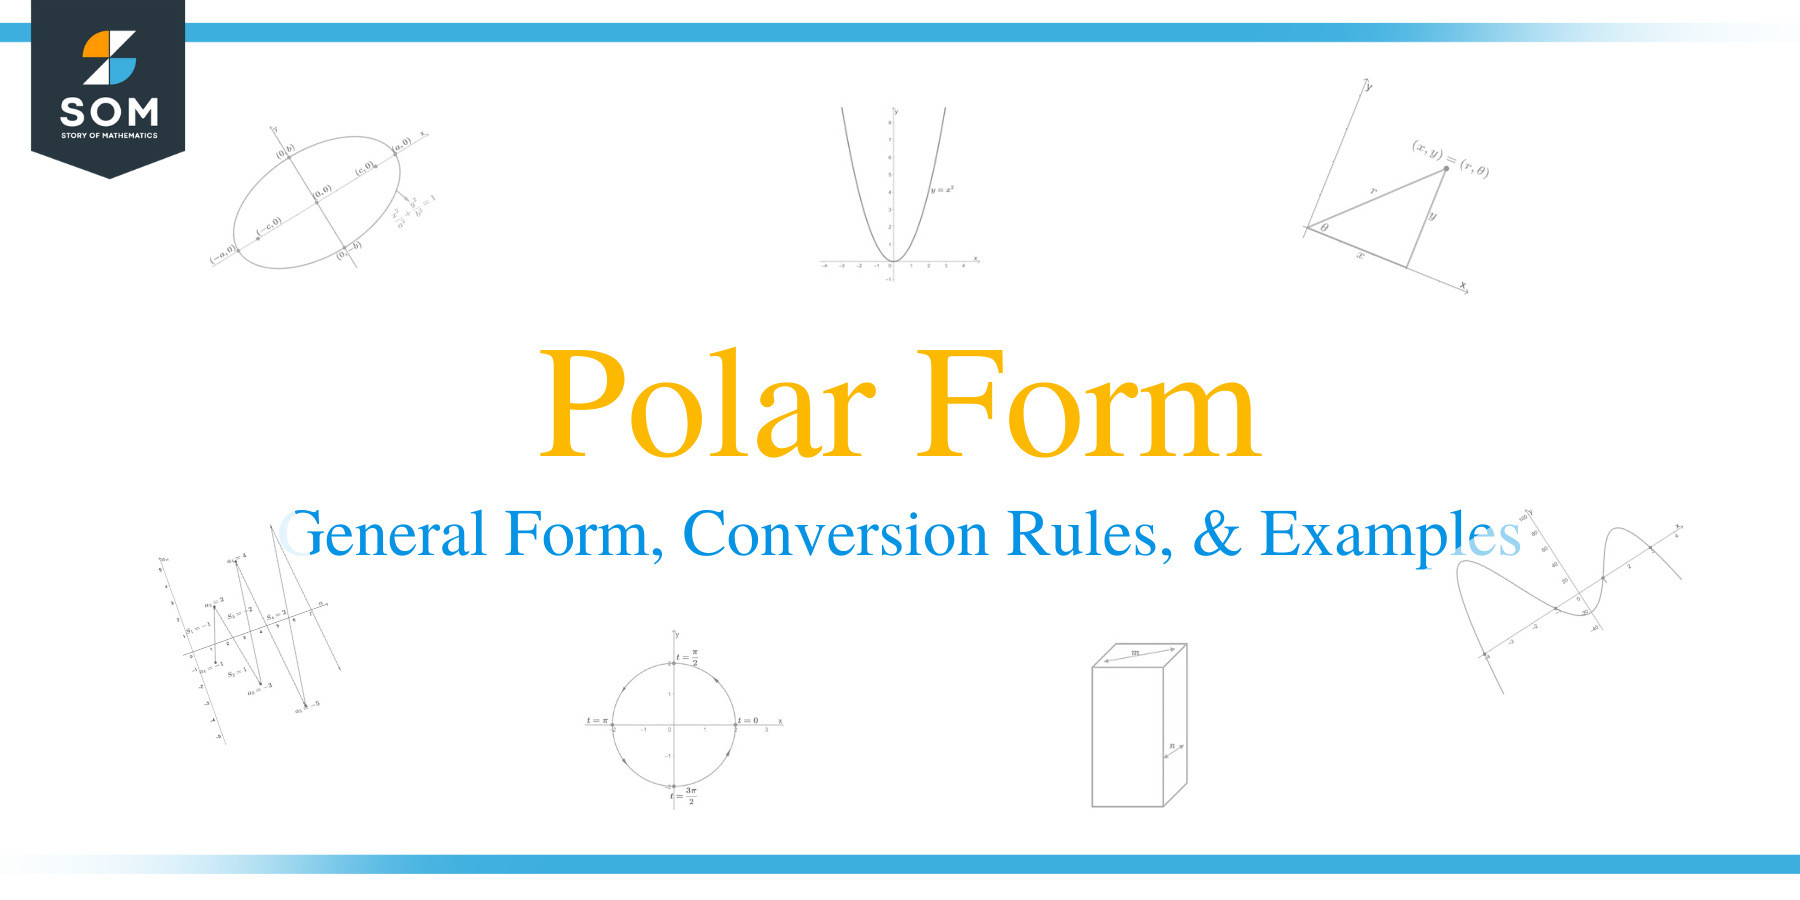 Polar form